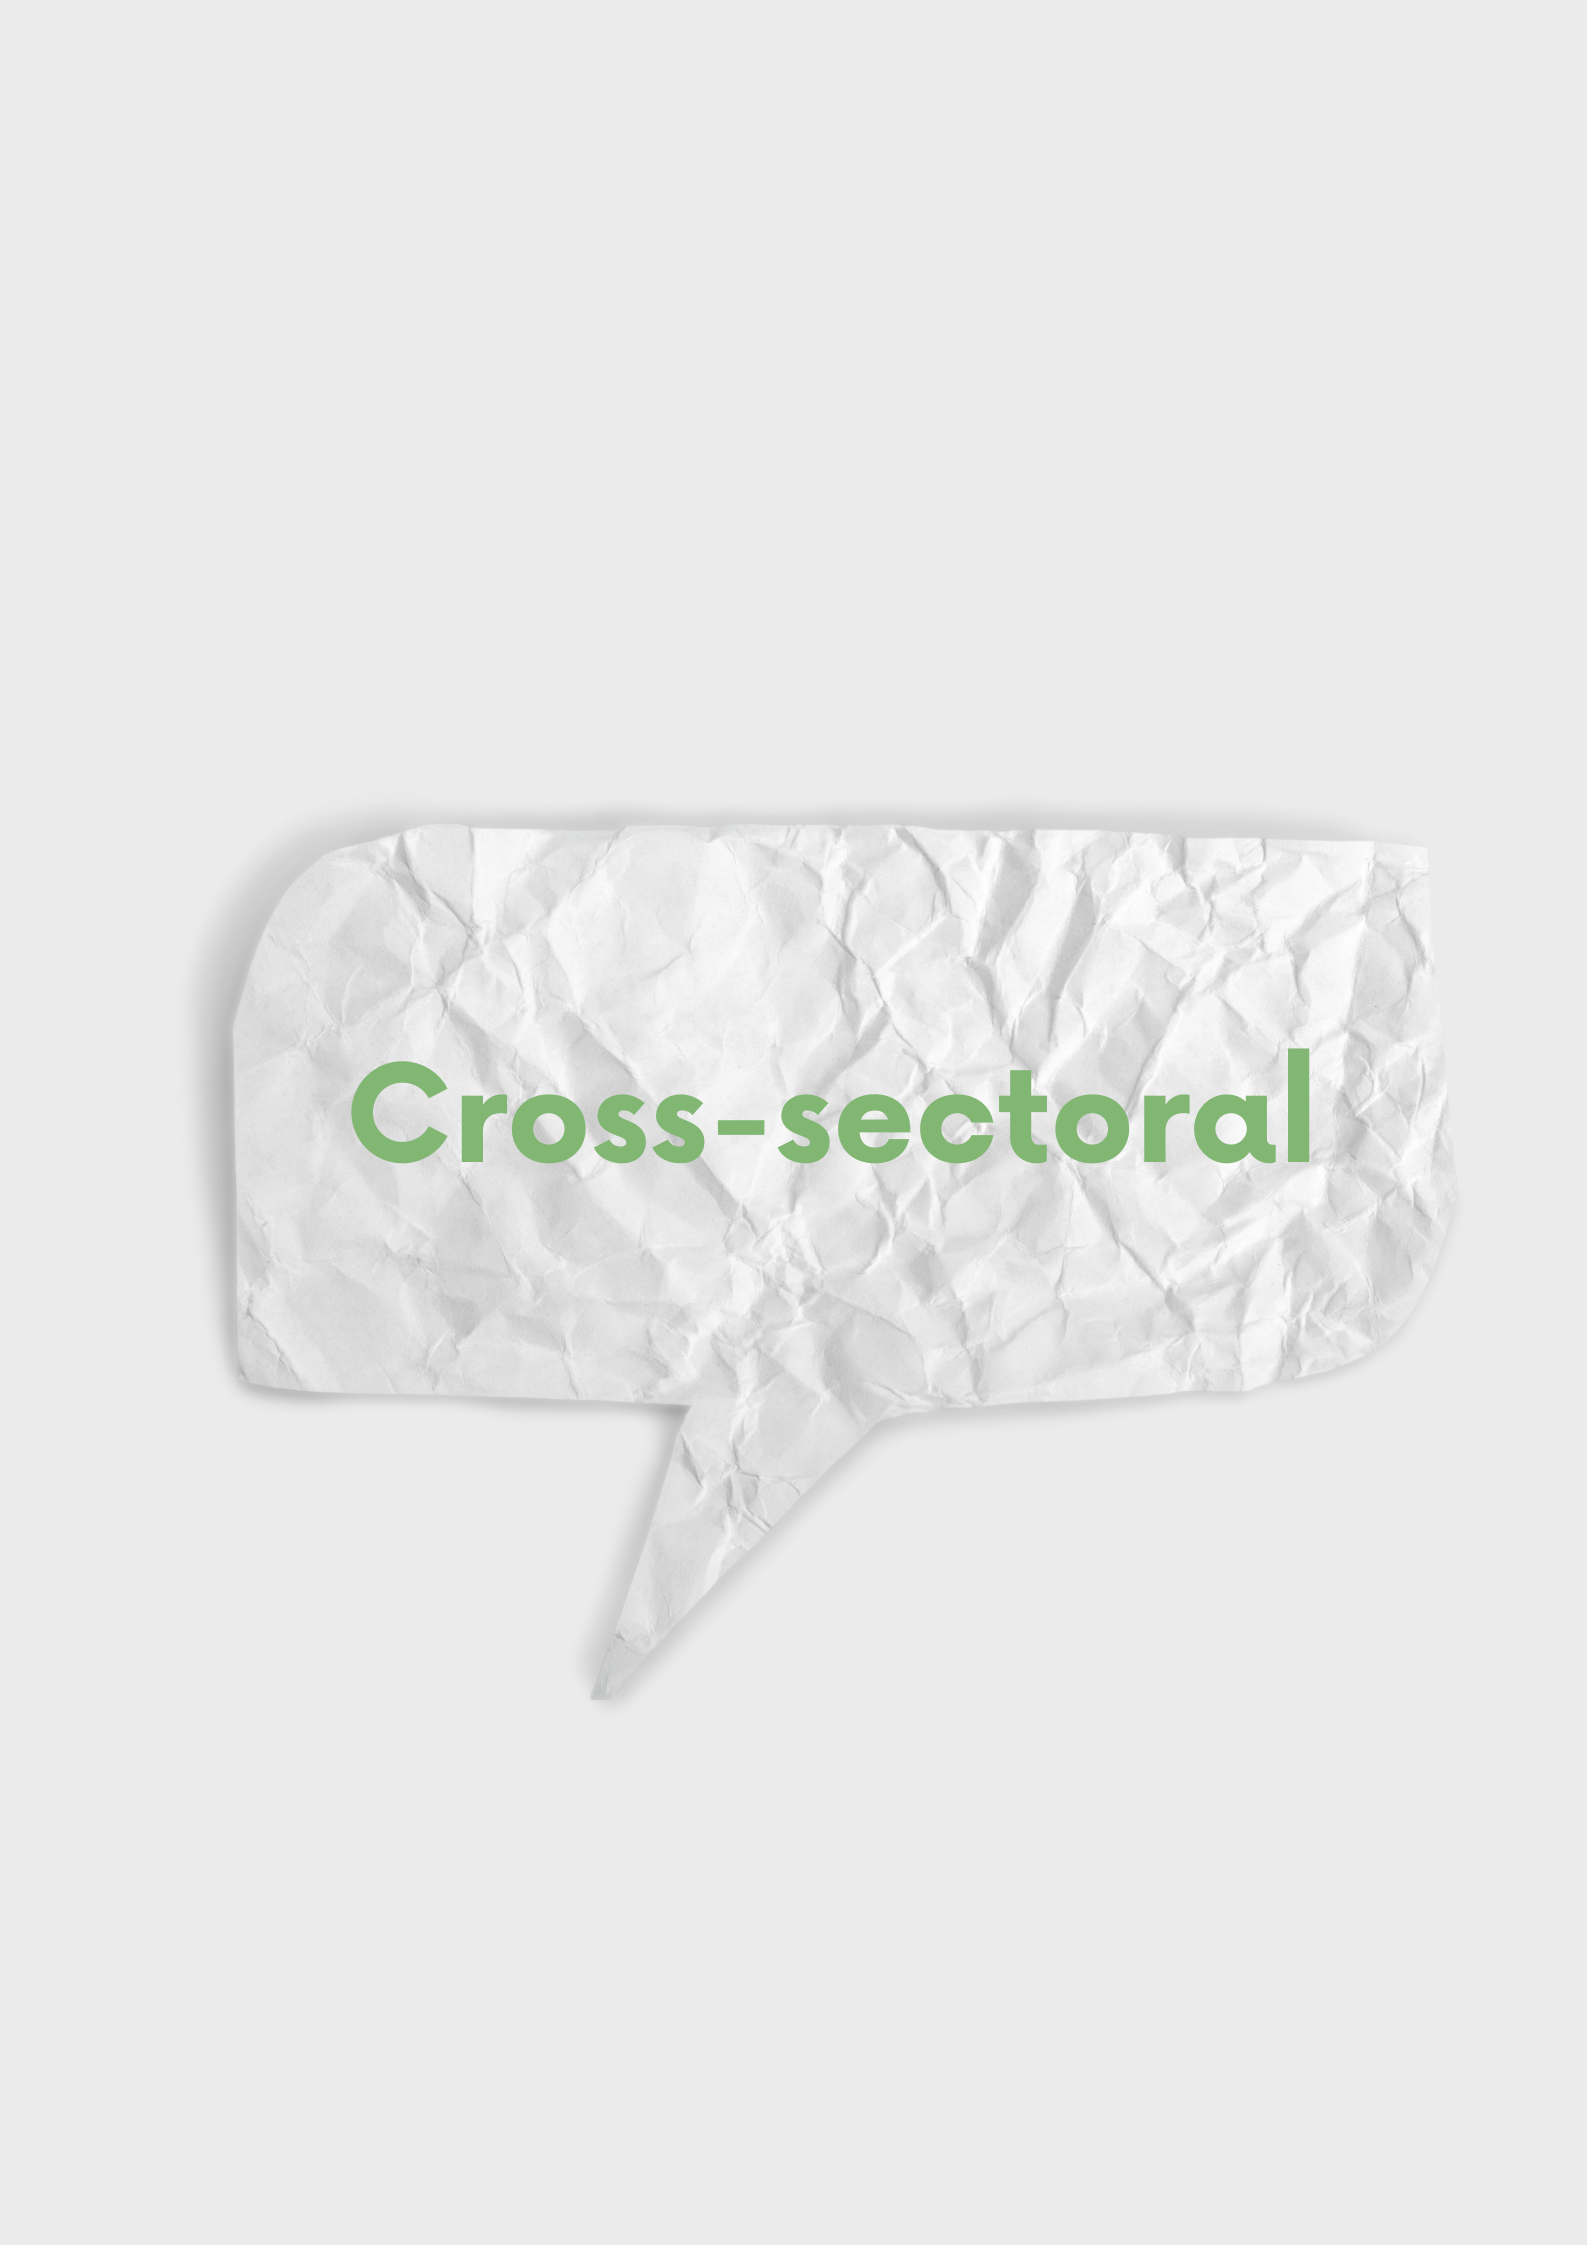 Cross-sectoral